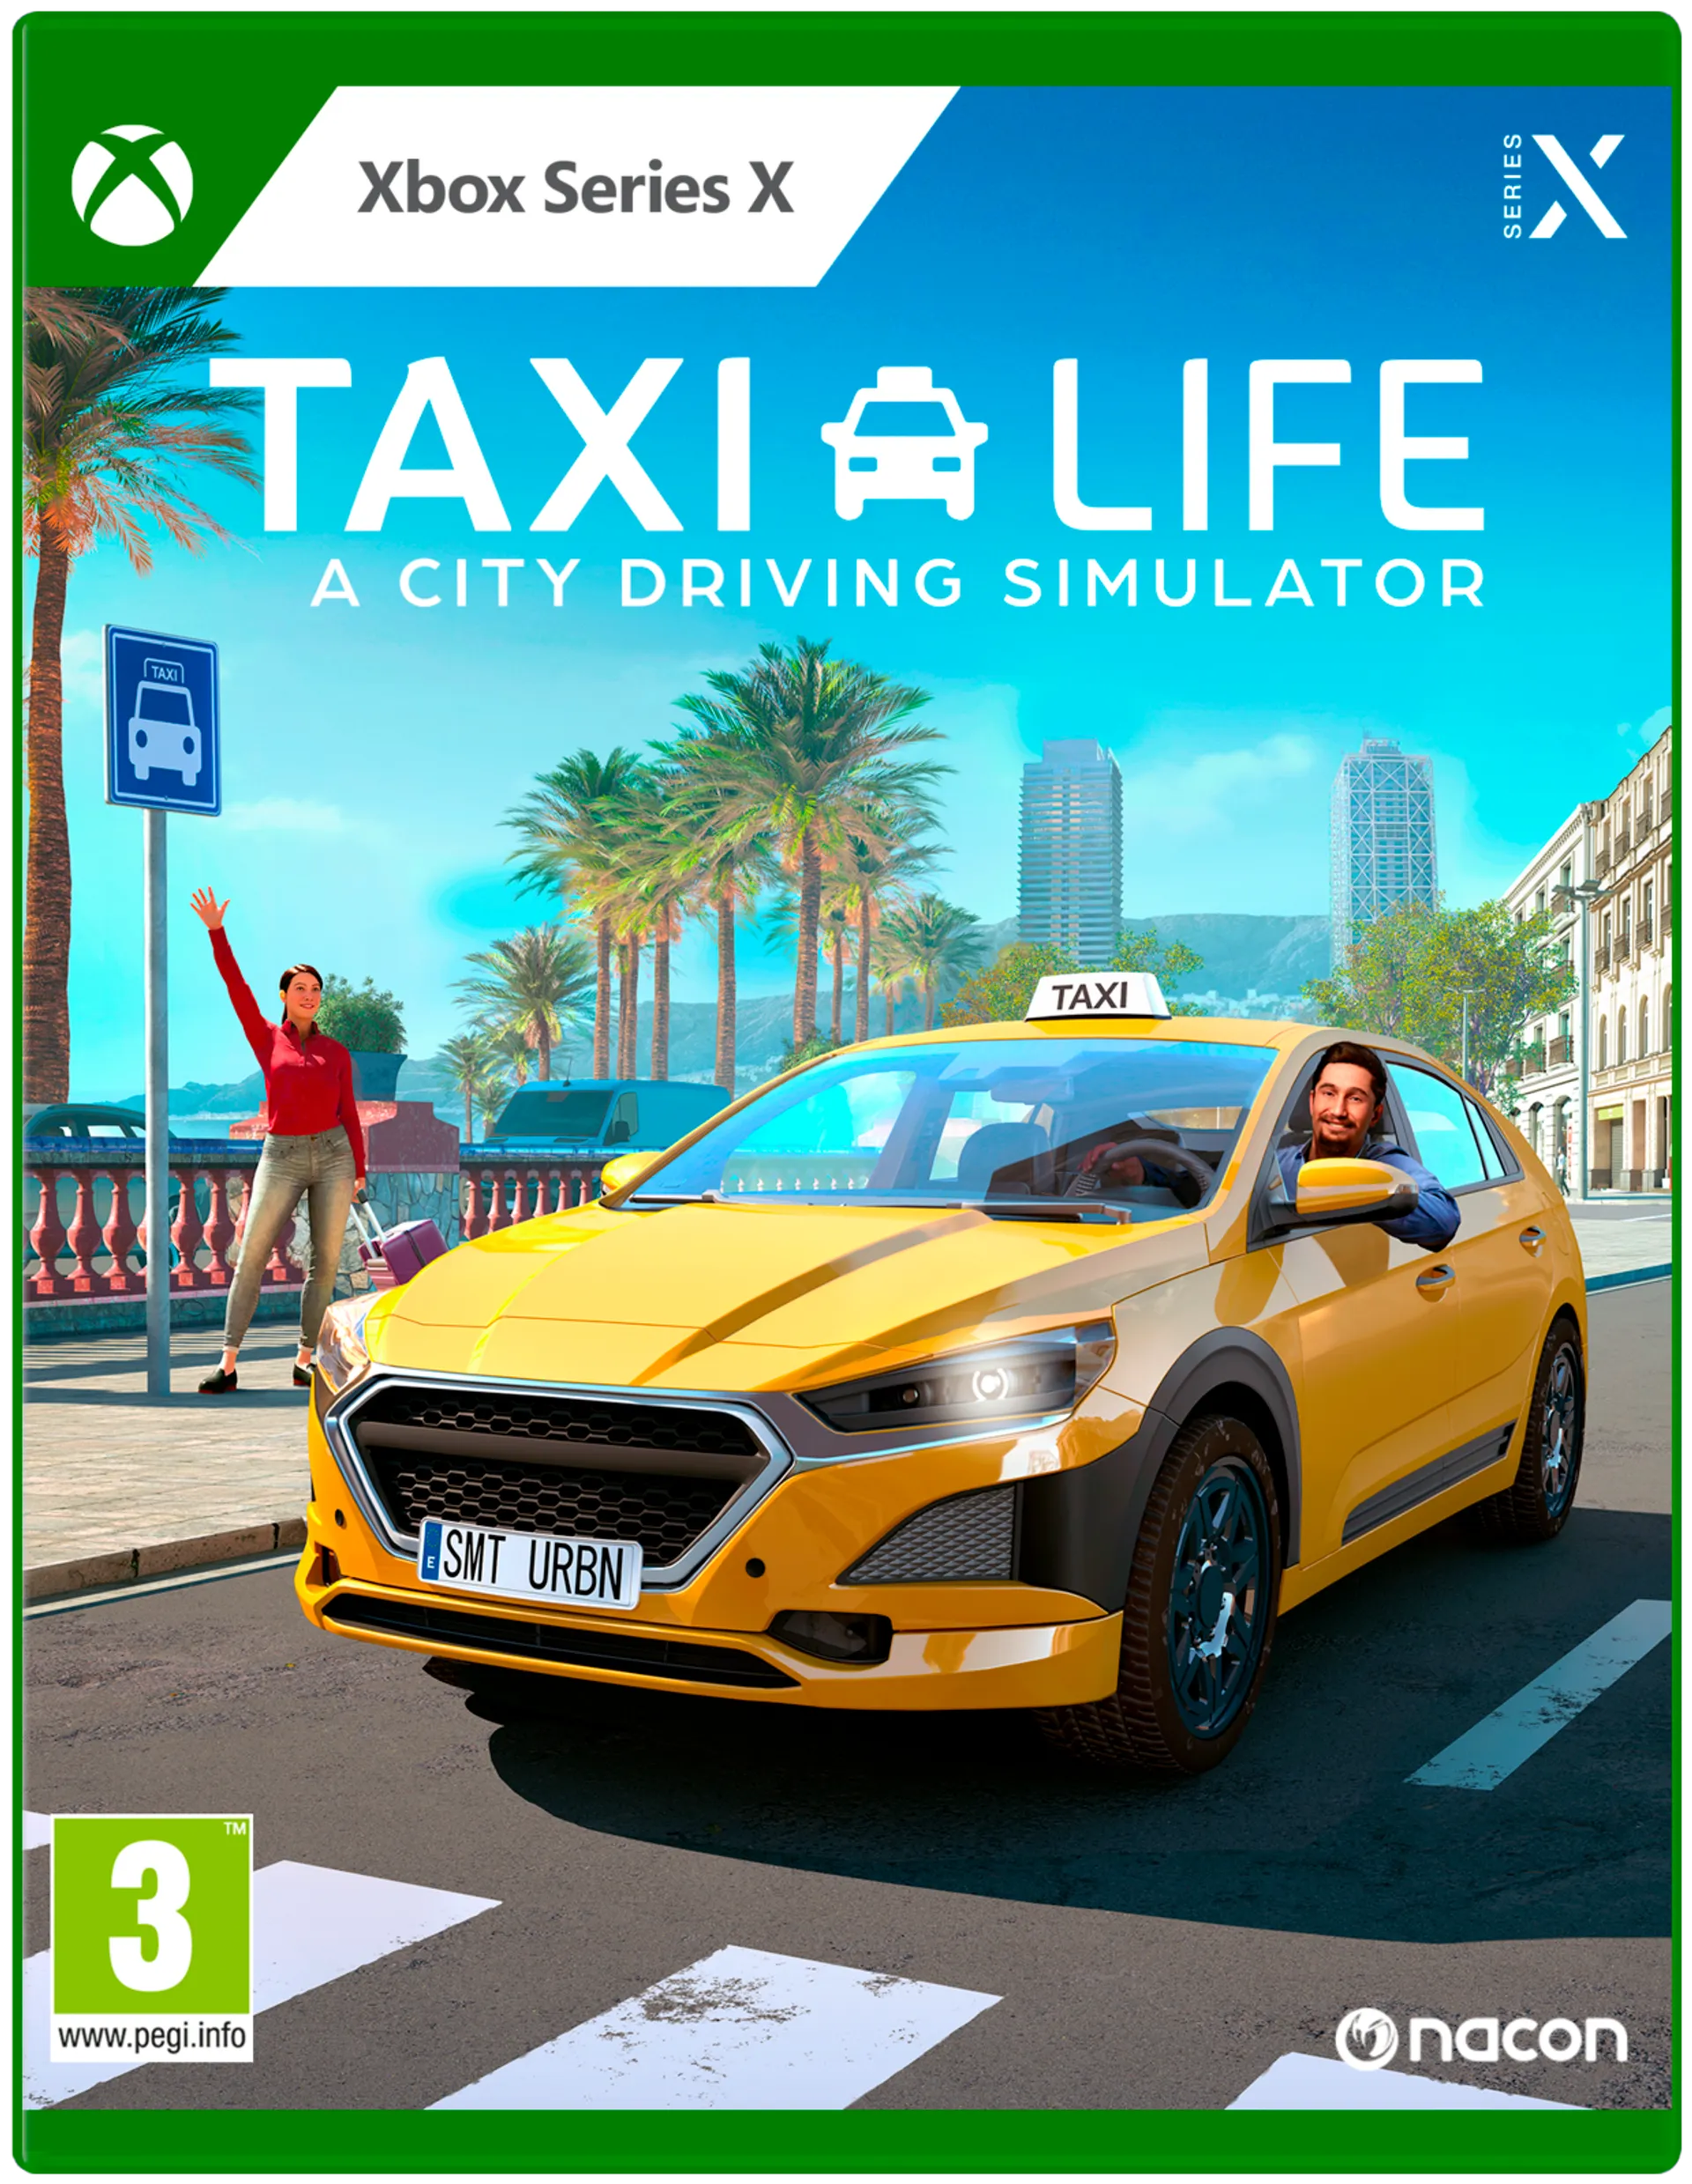 XSX Taxi Life: a City Driving Simulator